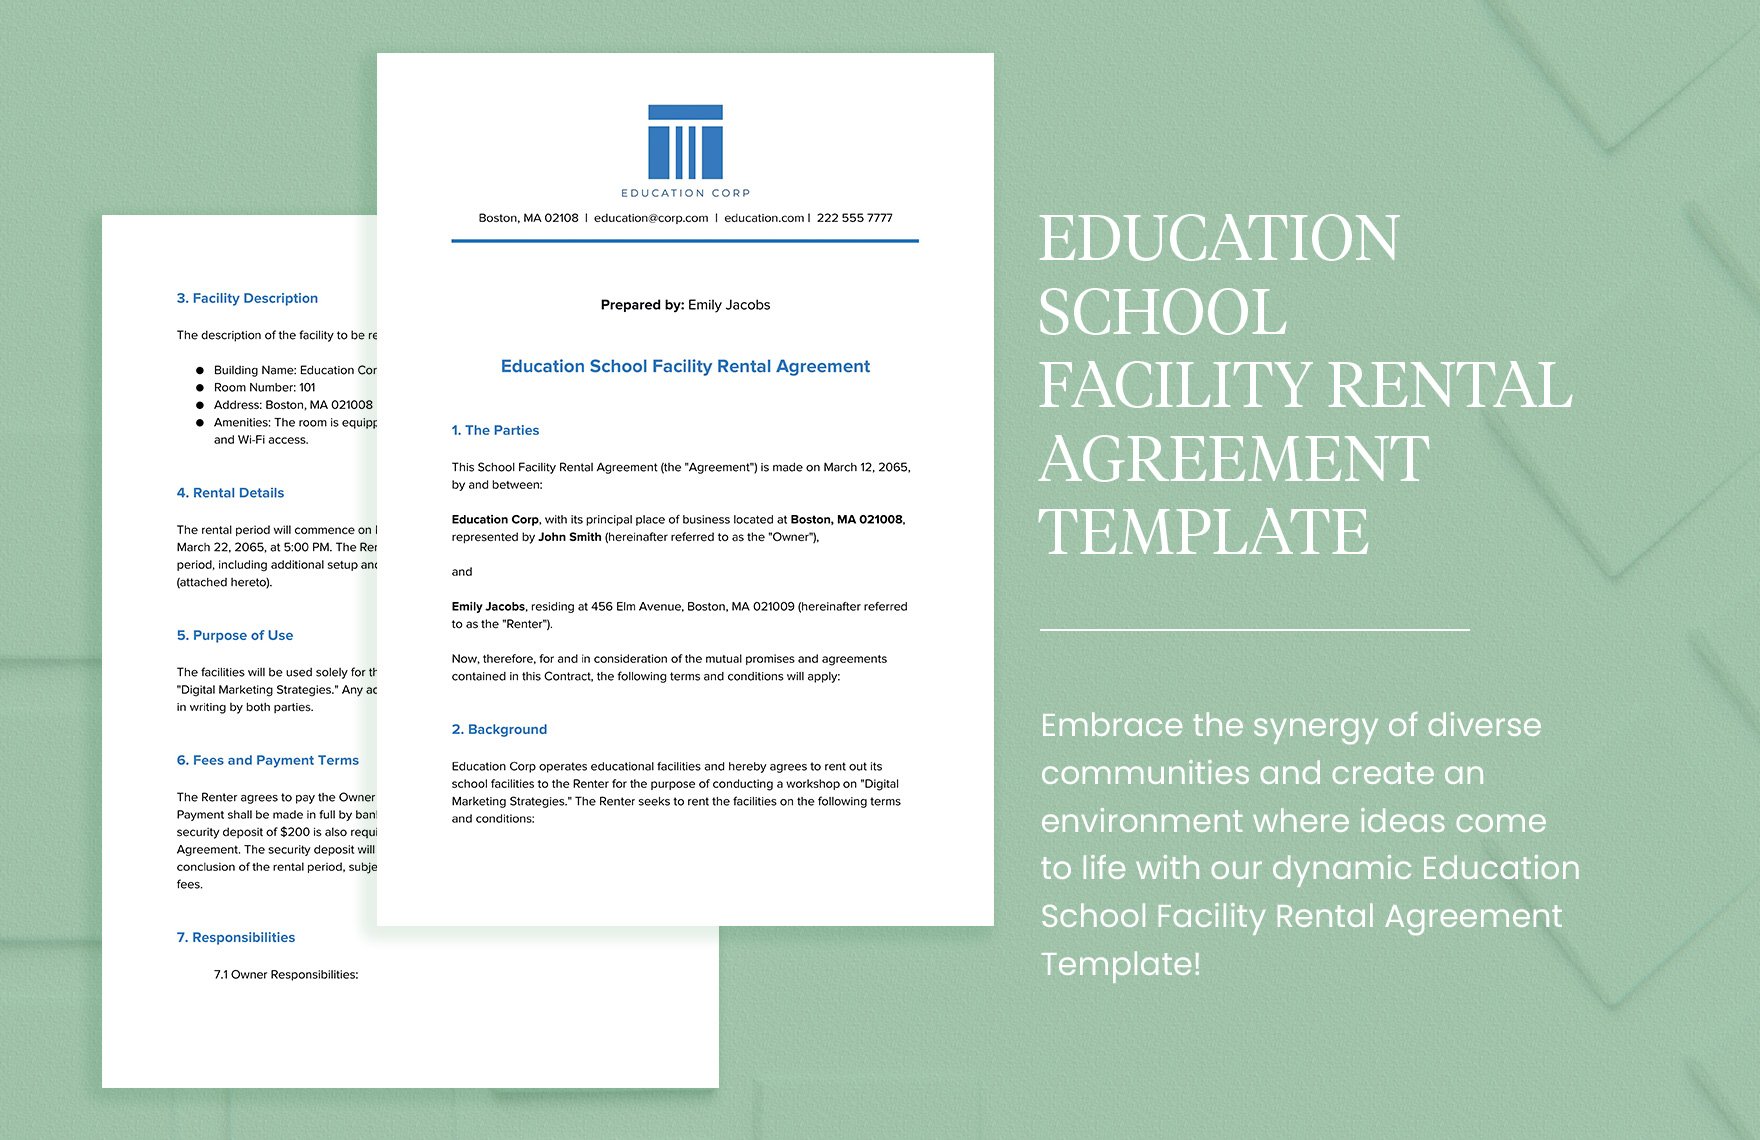 Education School Facility Rental Agreement Template in Word, Google Docs, PDF